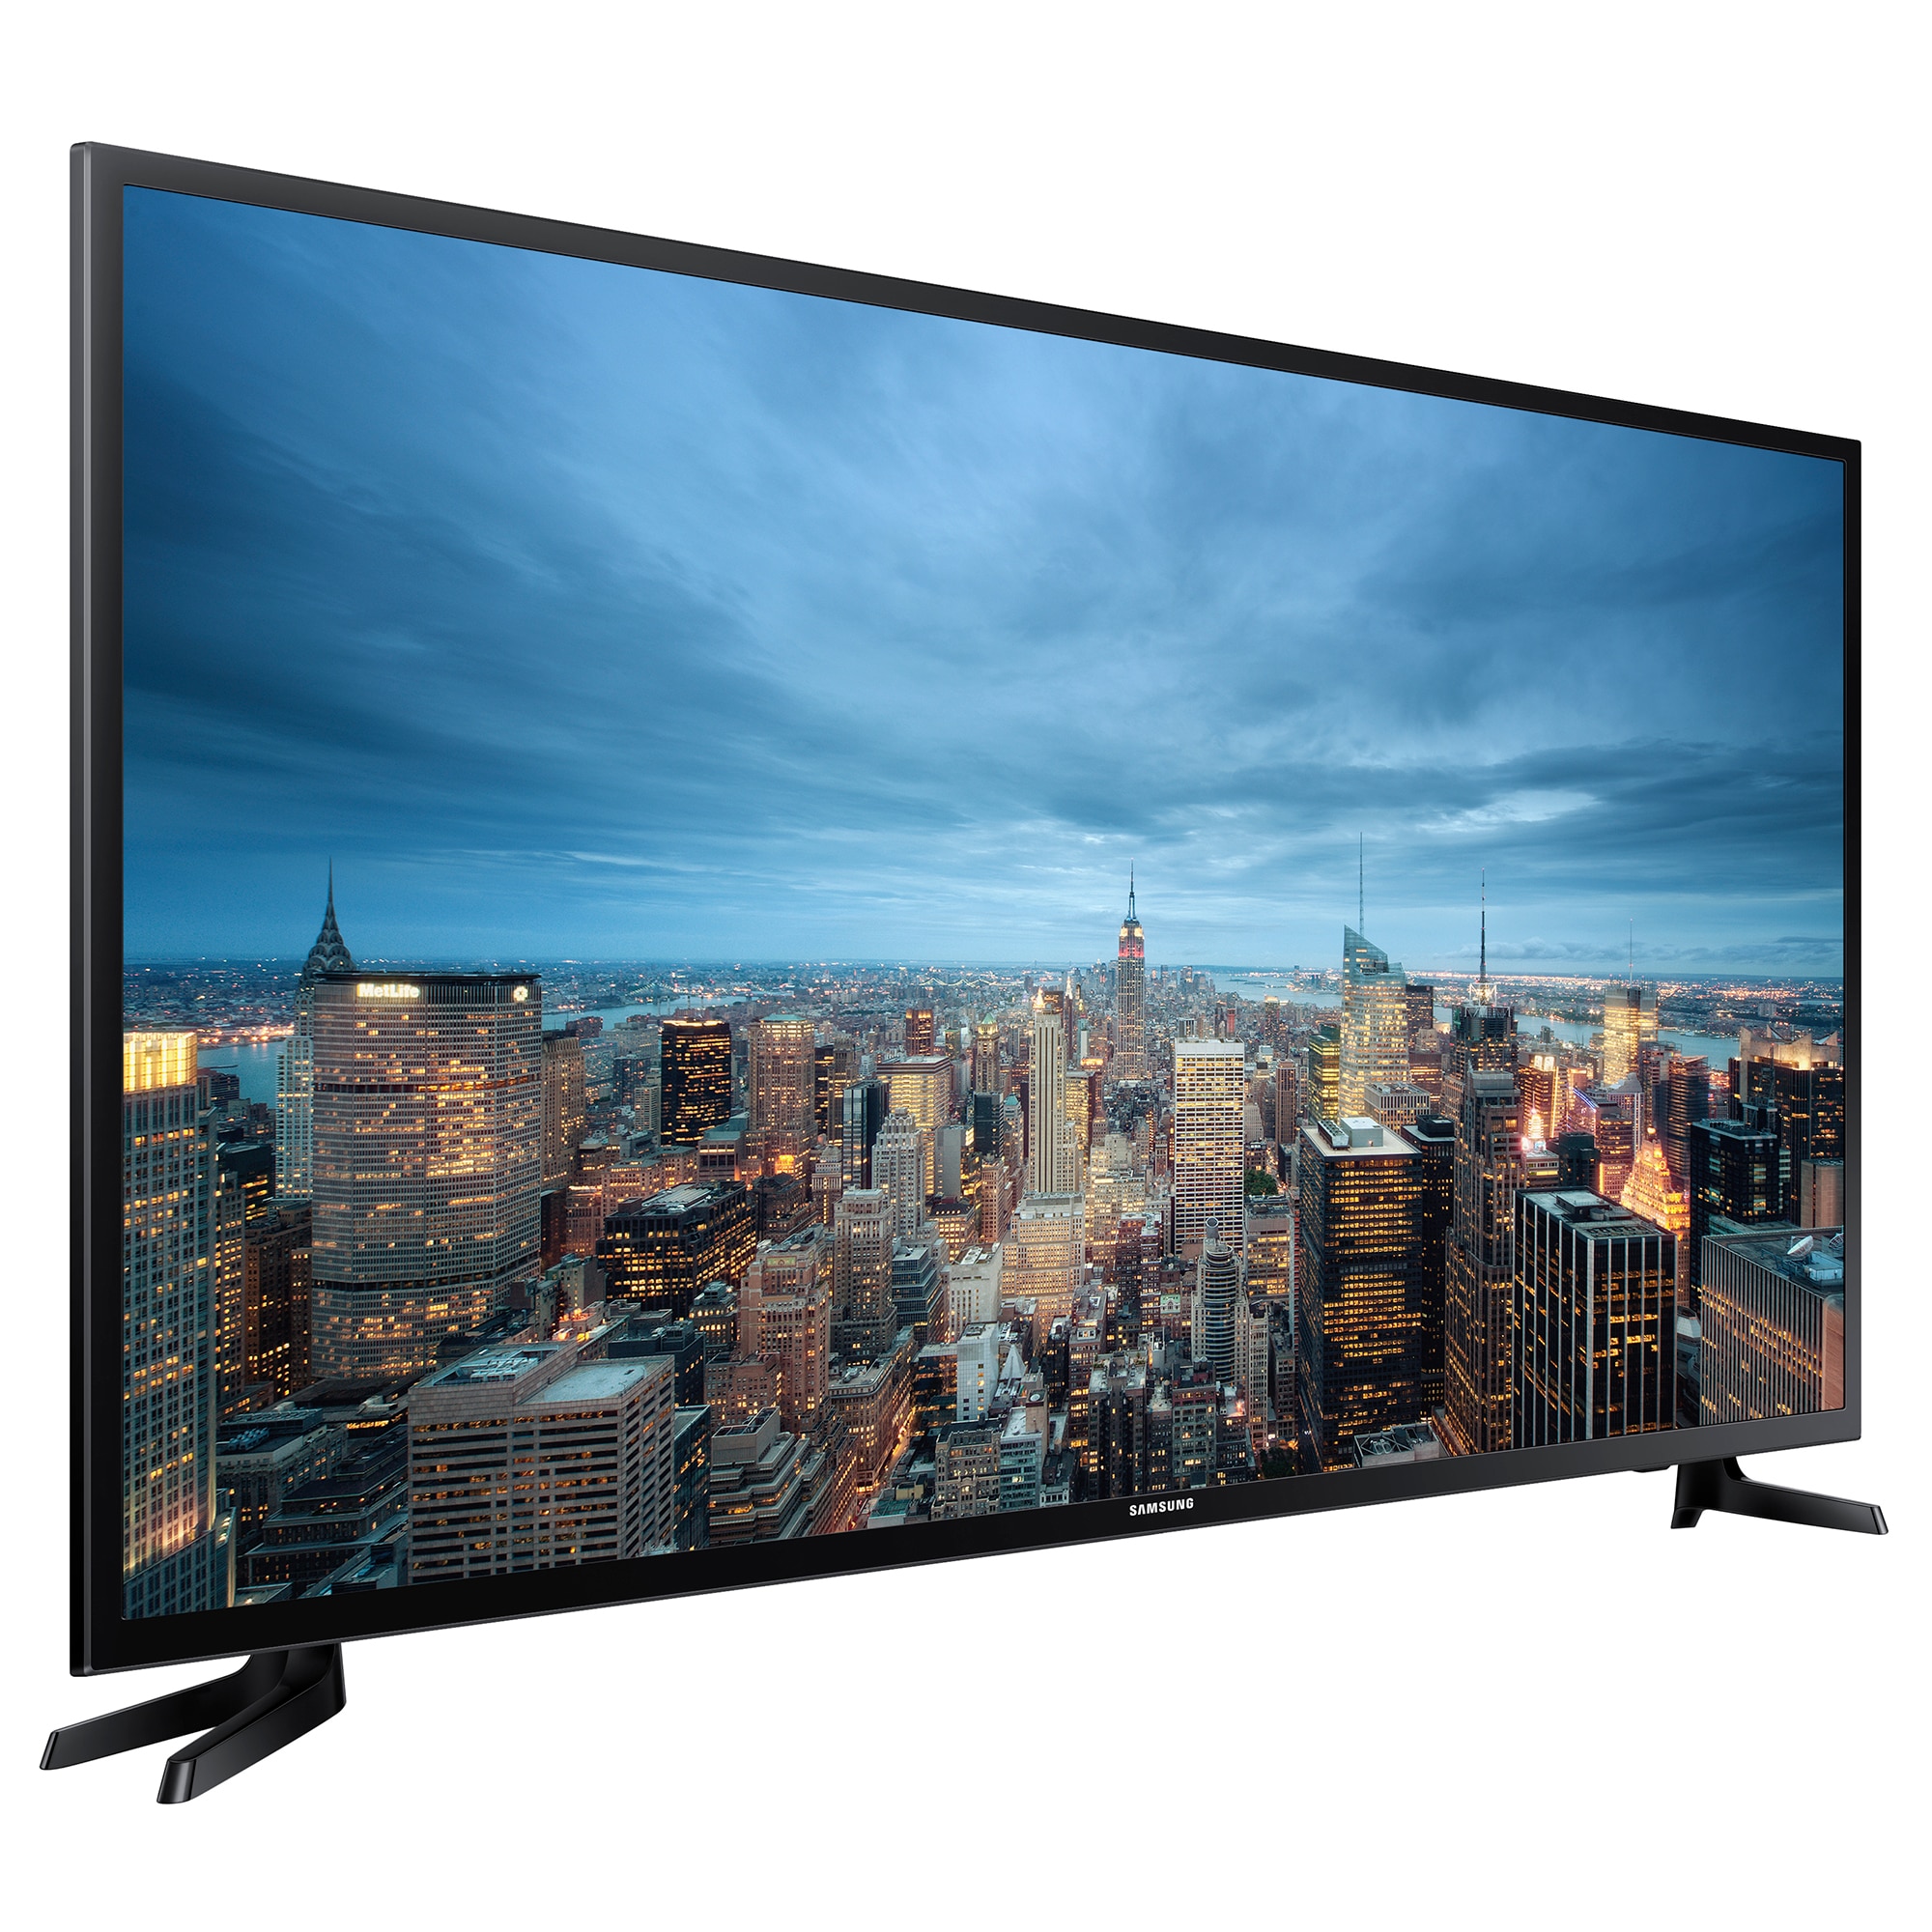 Телевизор самсунг краснодар. Samsung ue55ju6530u. Samsung ue43ju6000u. Samsung Smart TV 40. Телевизор Samsung ue48ju6000u 48" (2015).